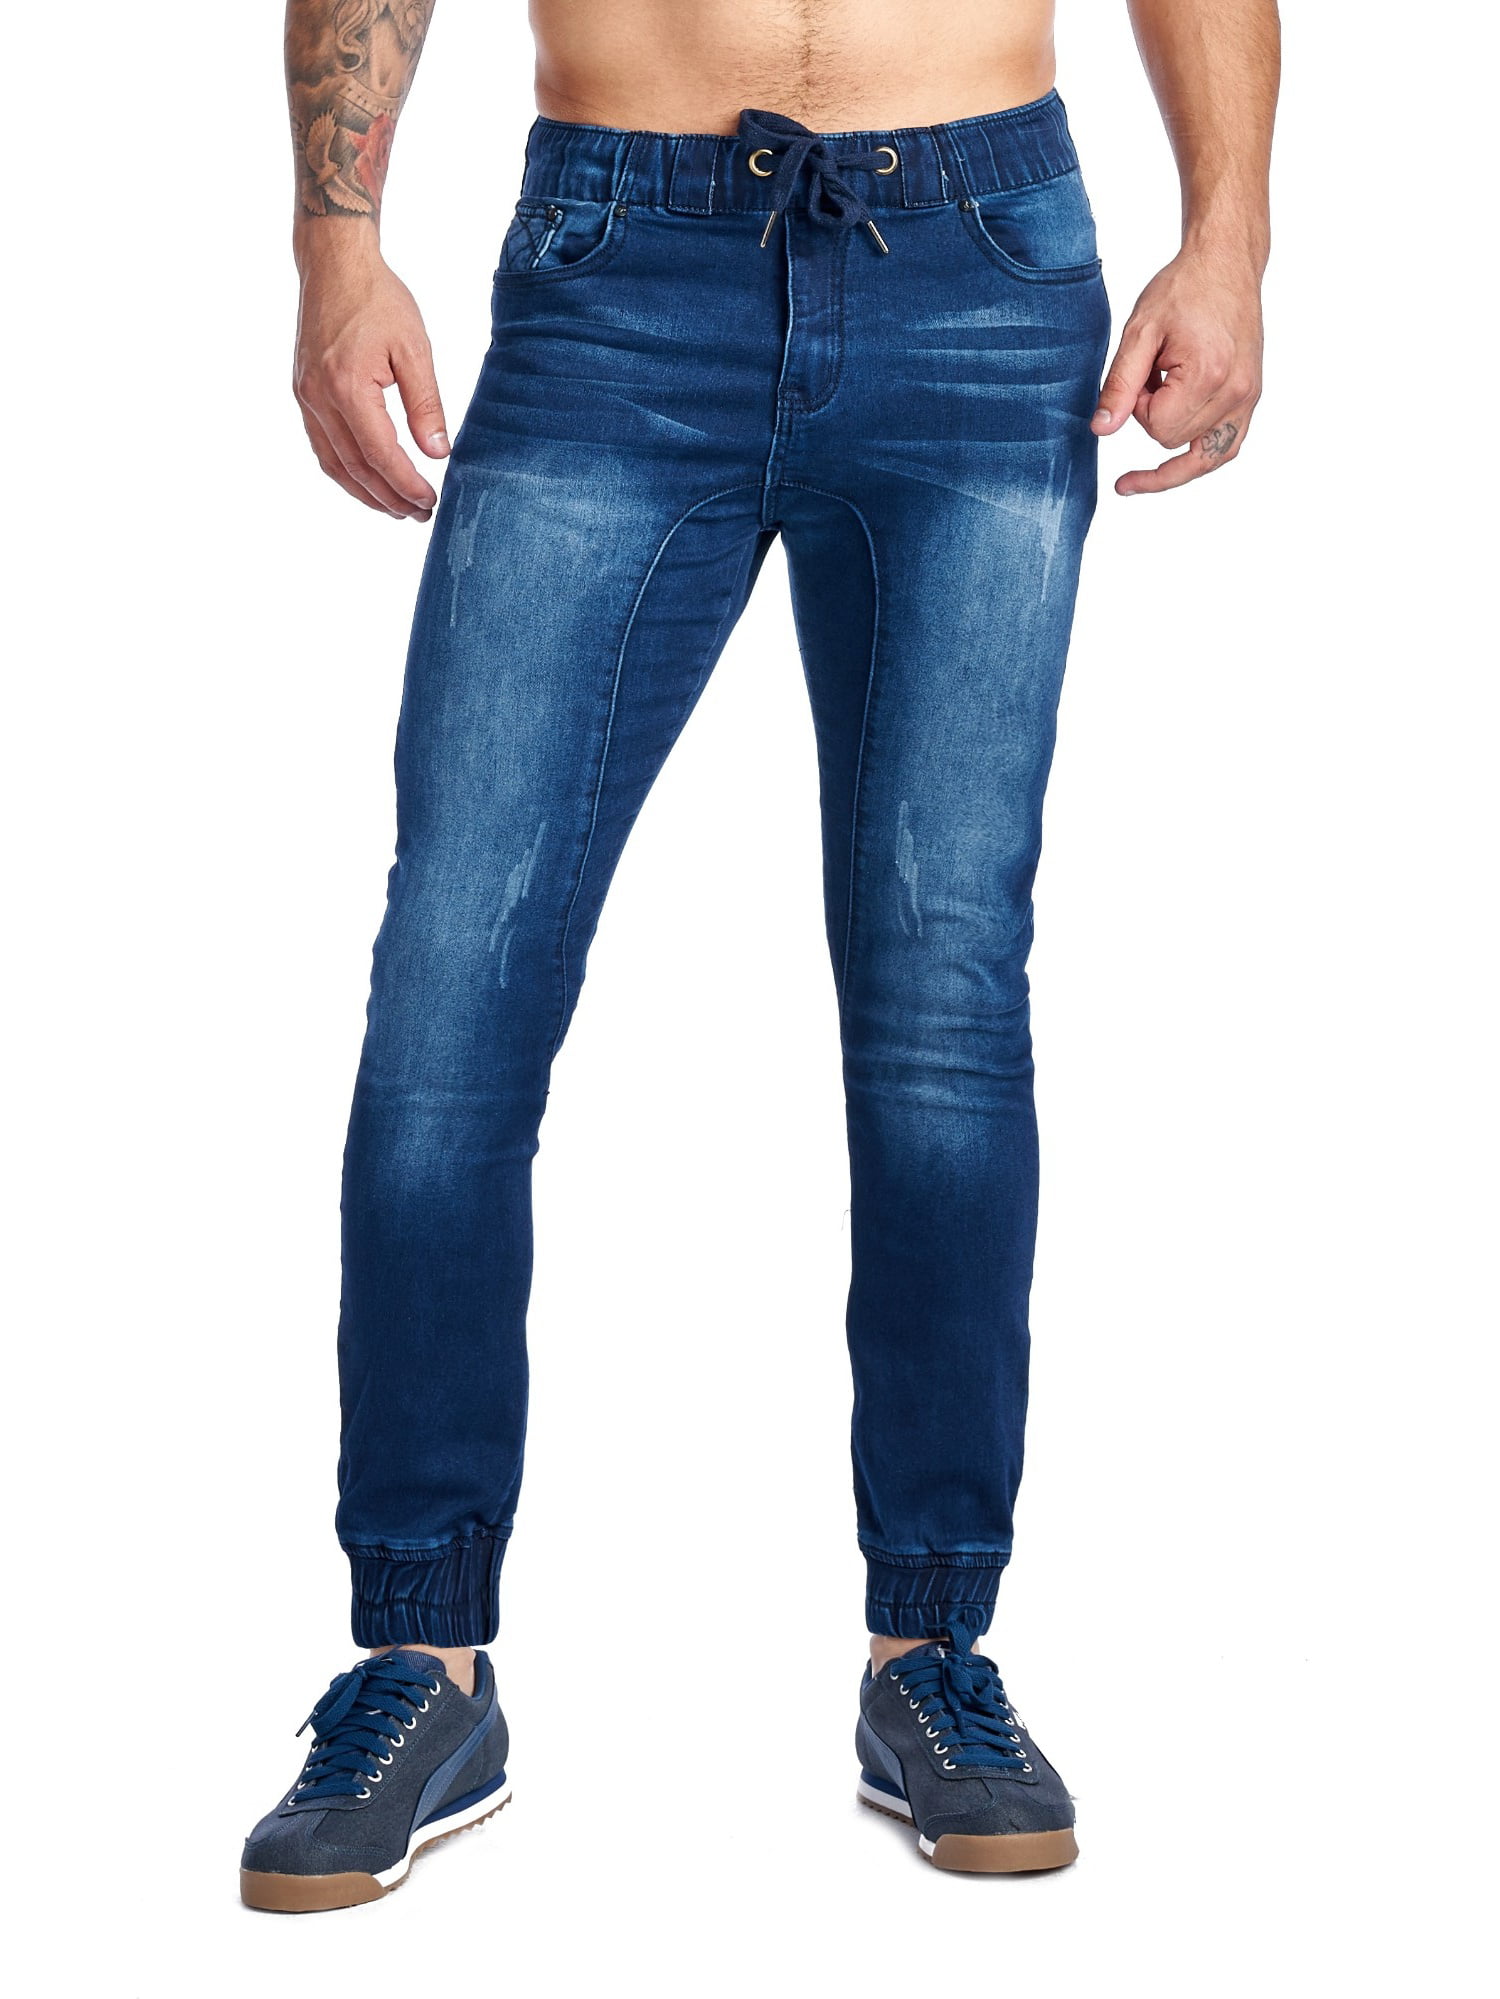 A Jeans Men's Denim Pant Jogger Styling Slim Fit 42124C Dark Blue Large ...